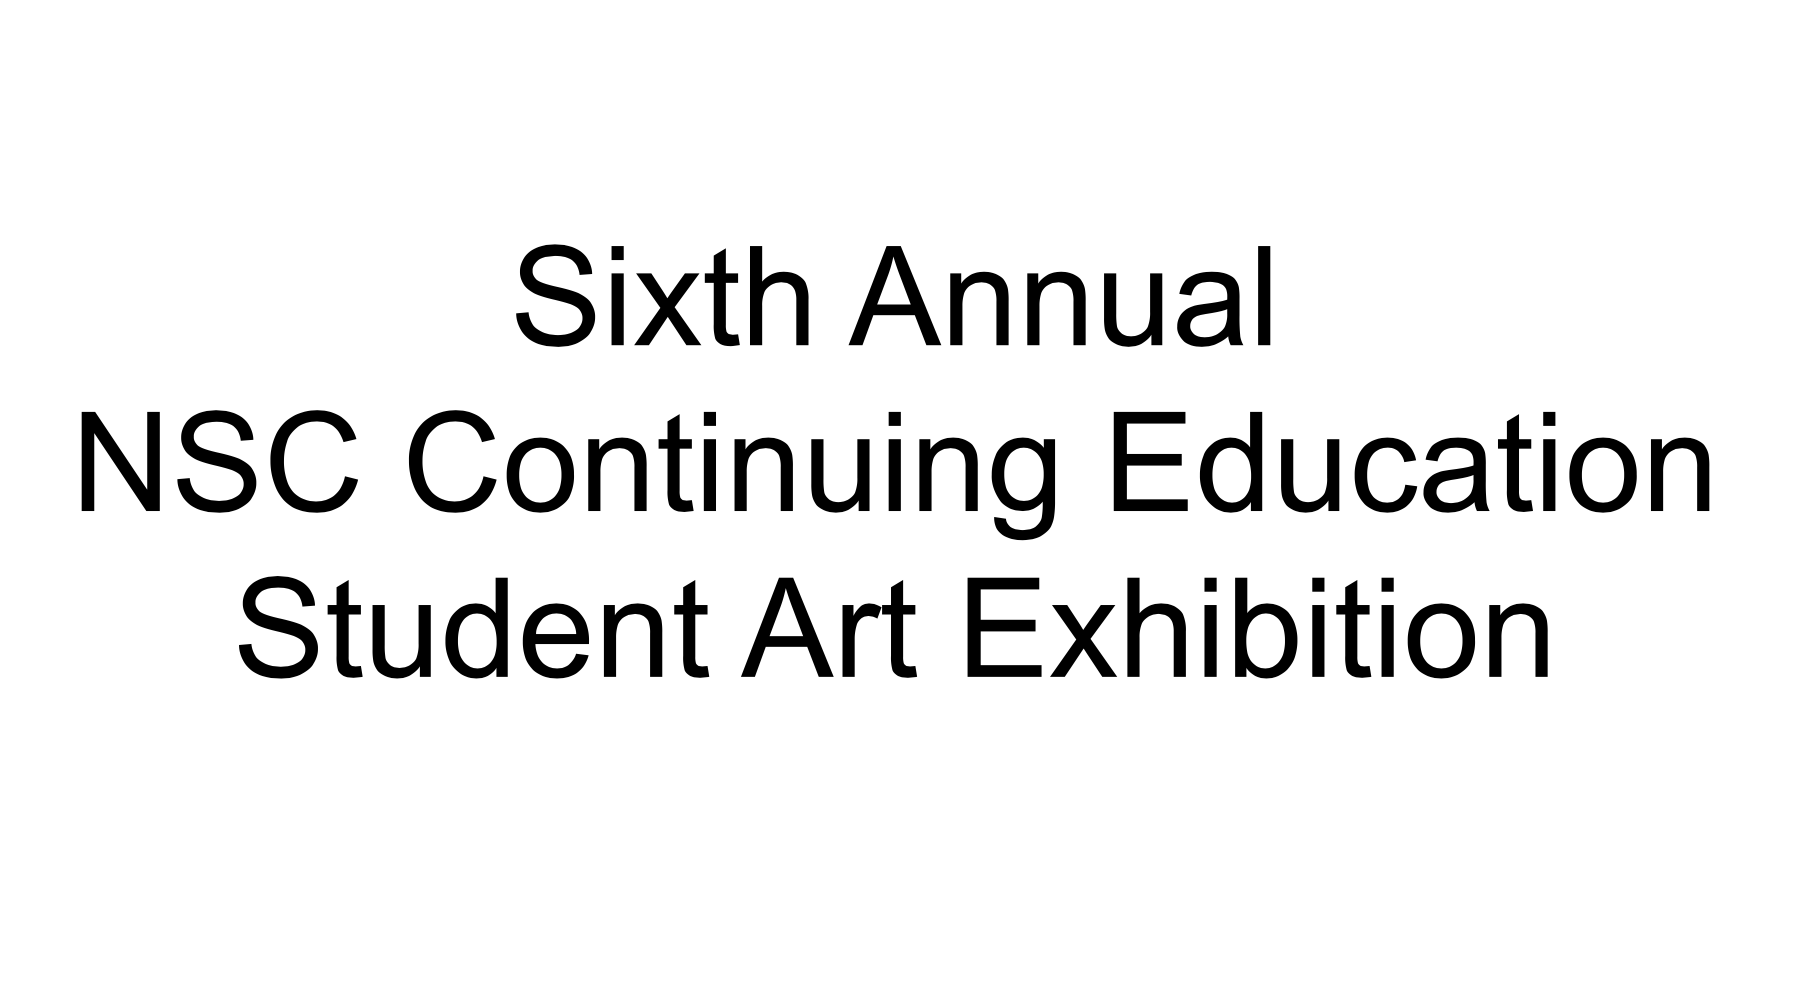 Exhibition Opening Slide 